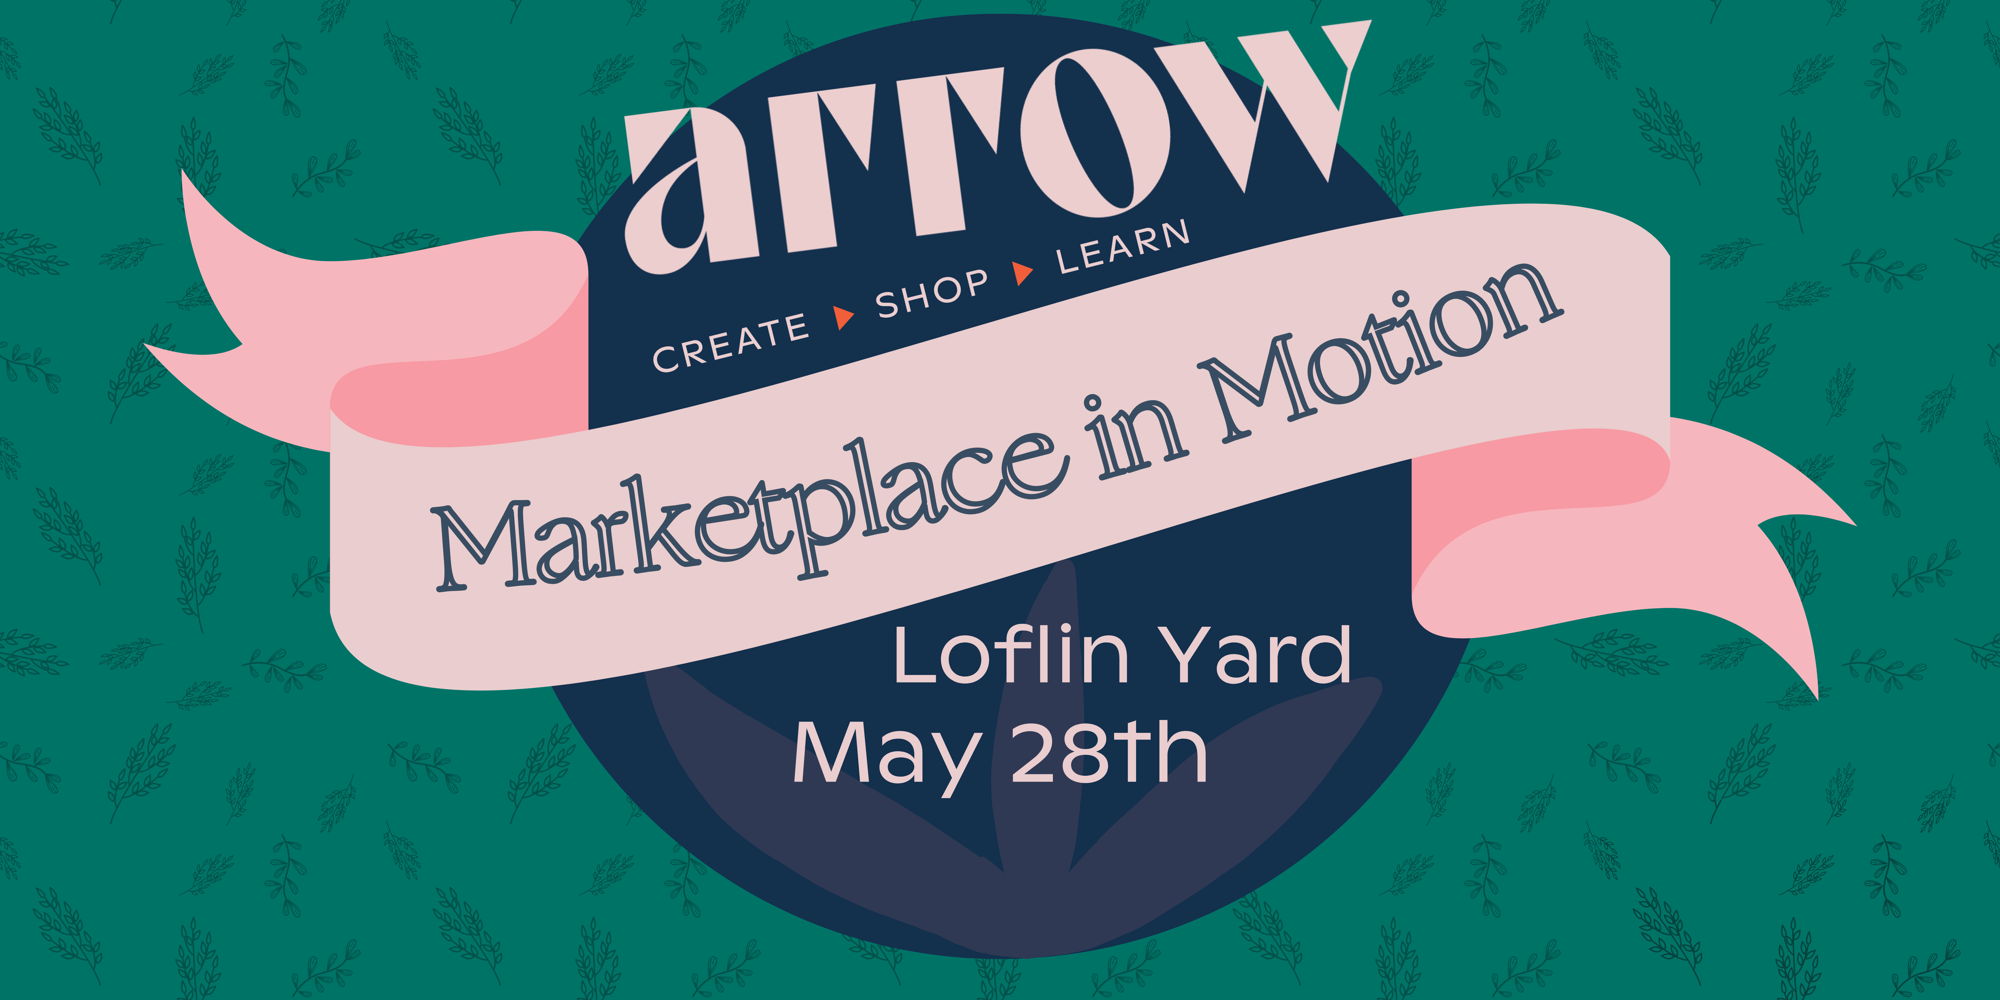 Marketplace in Motion: Loflin Yard promotional image